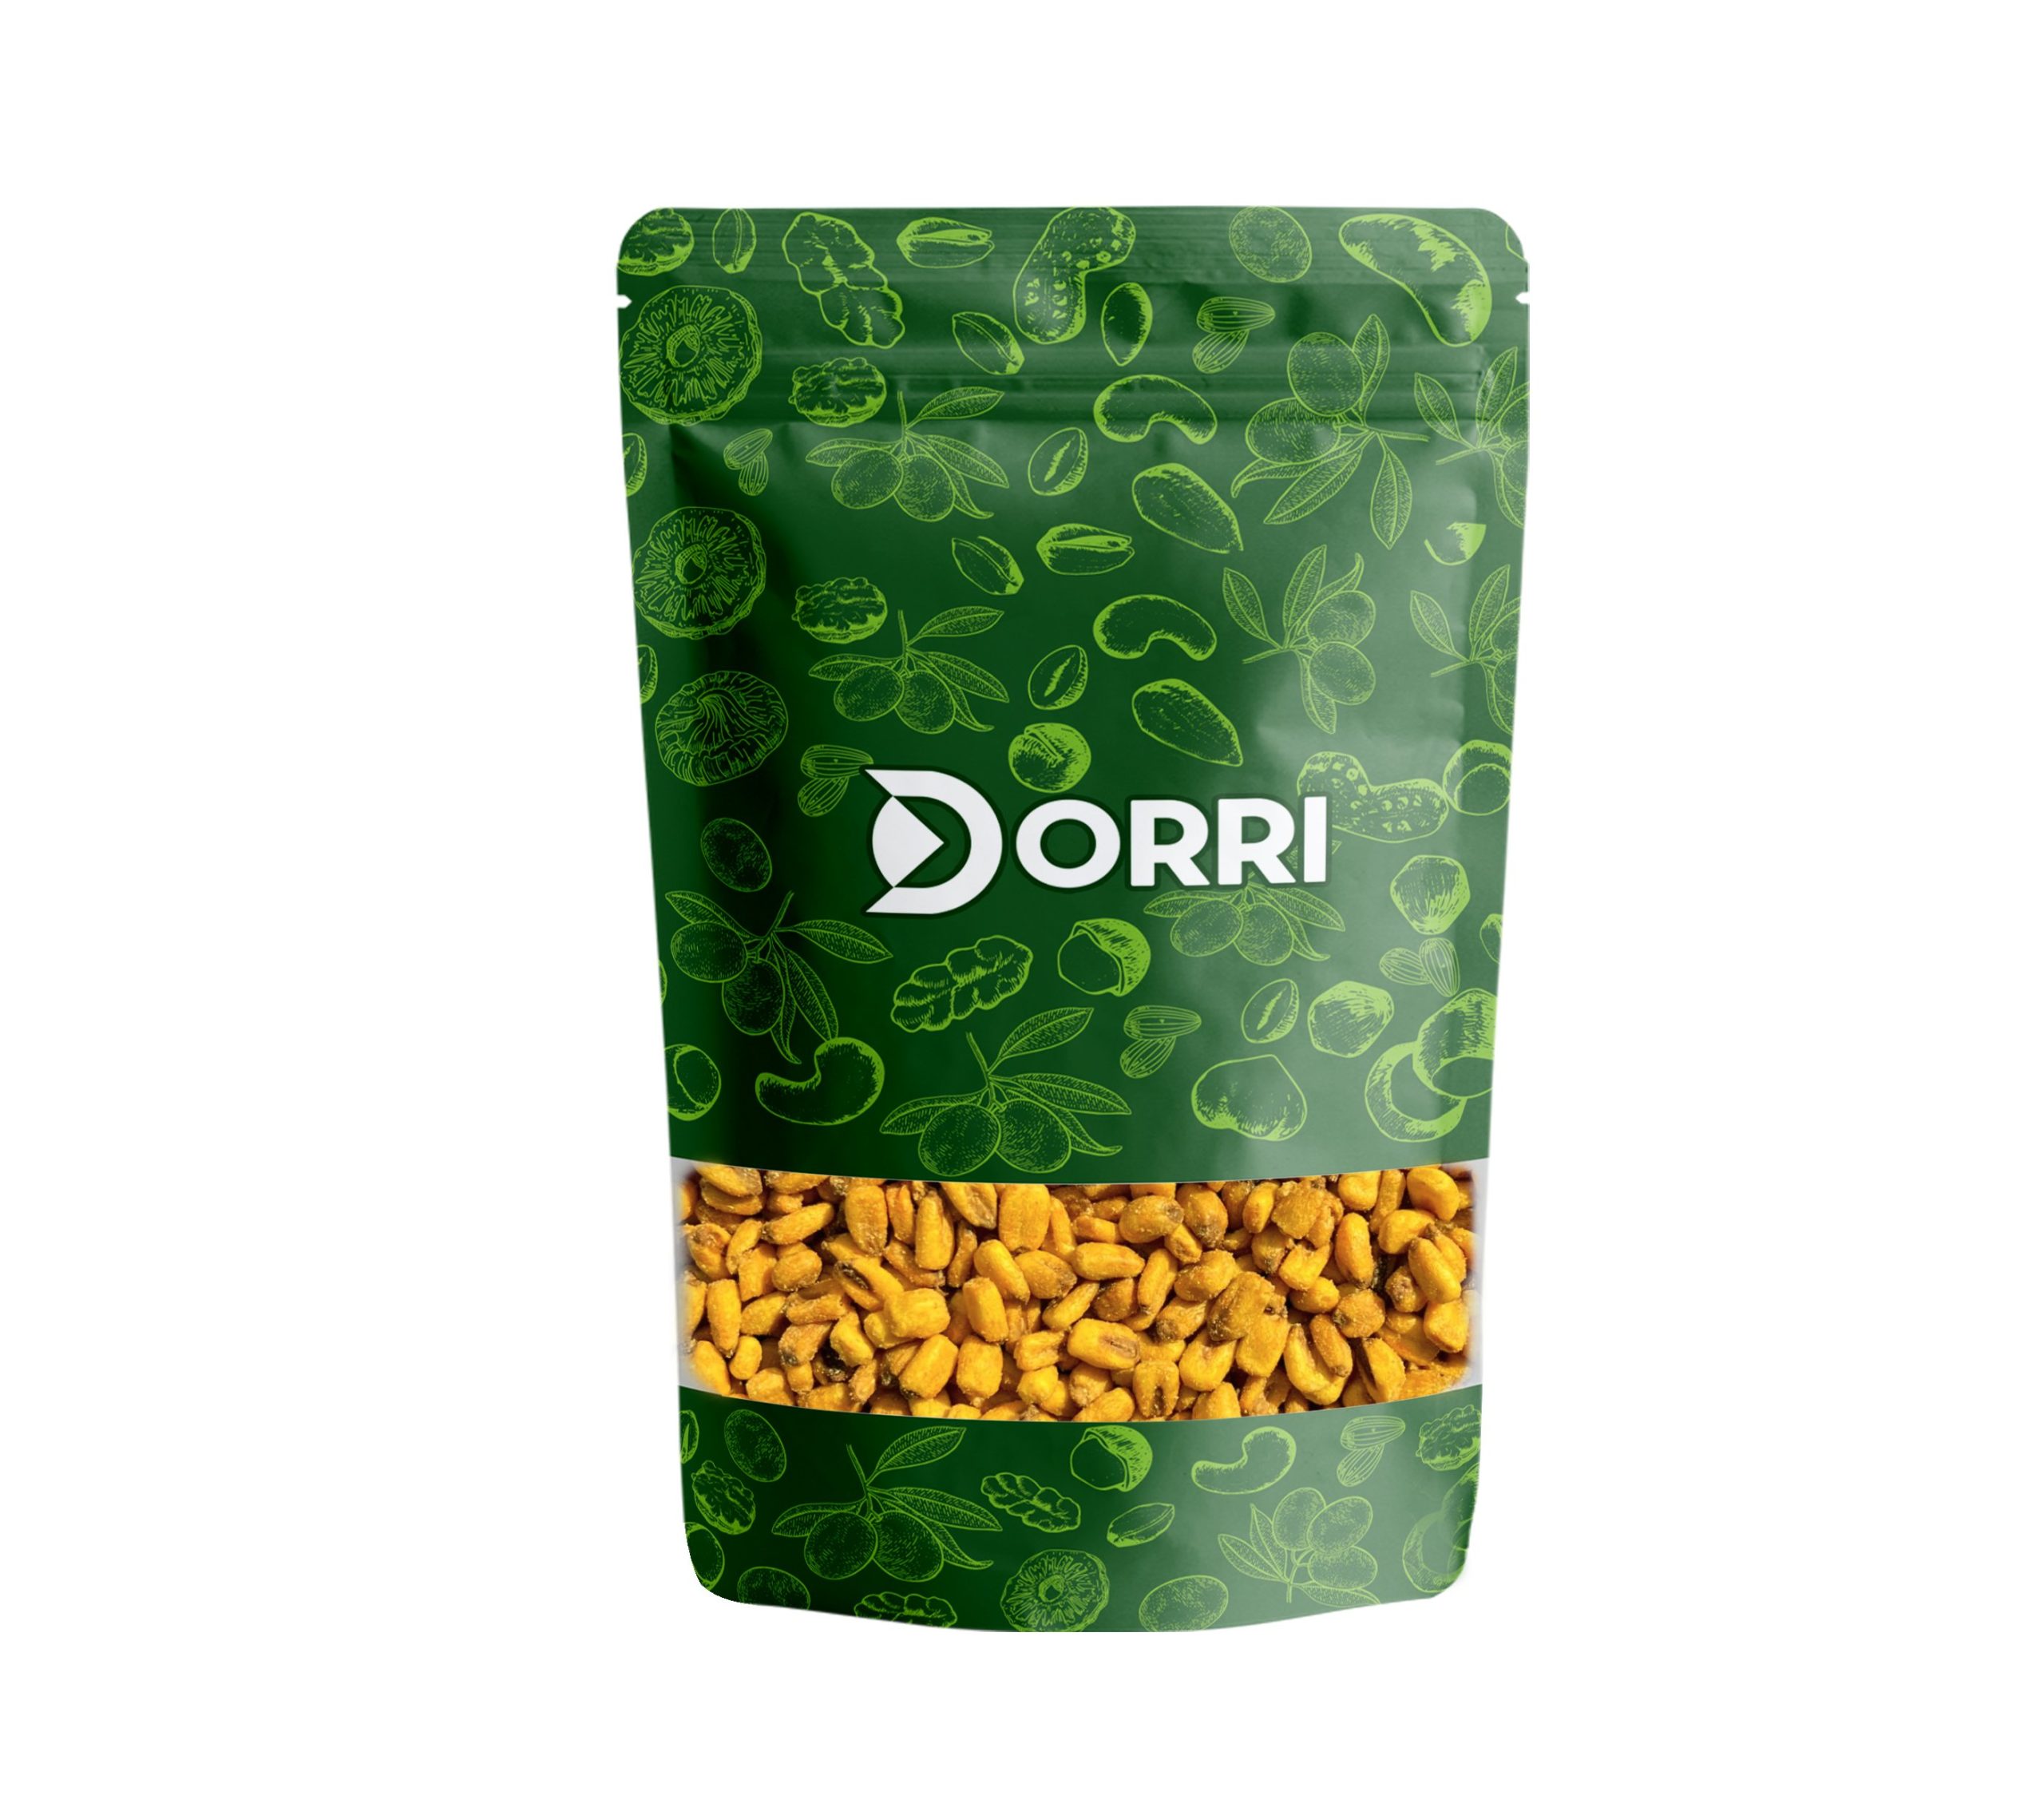 Dorri - Honey Mustard Corn